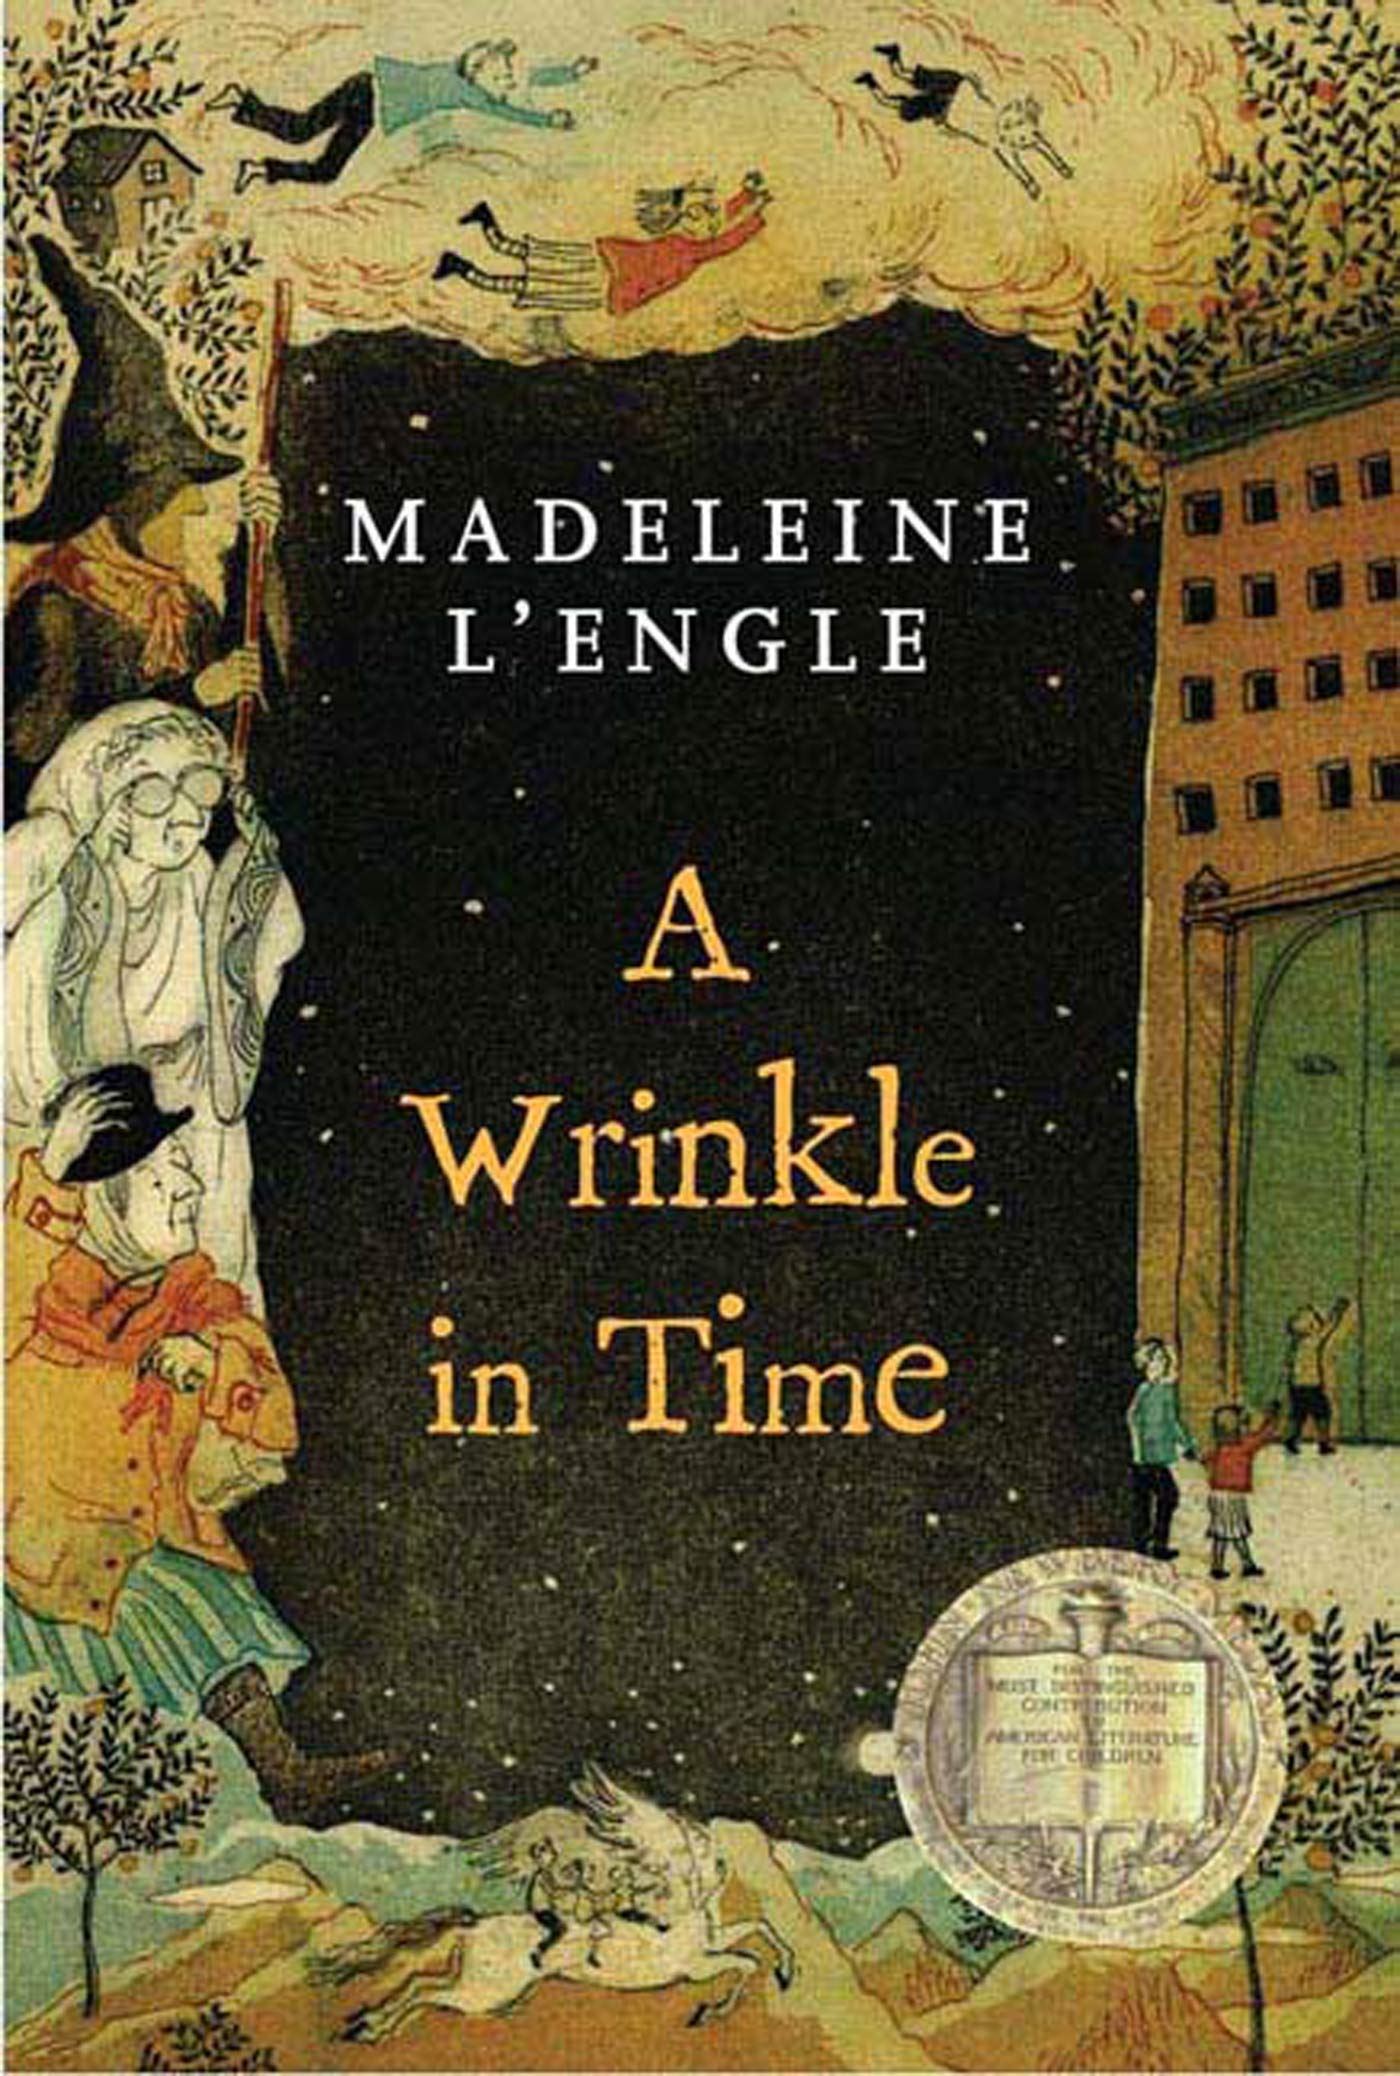 time travel YA books: a wrinkle in time